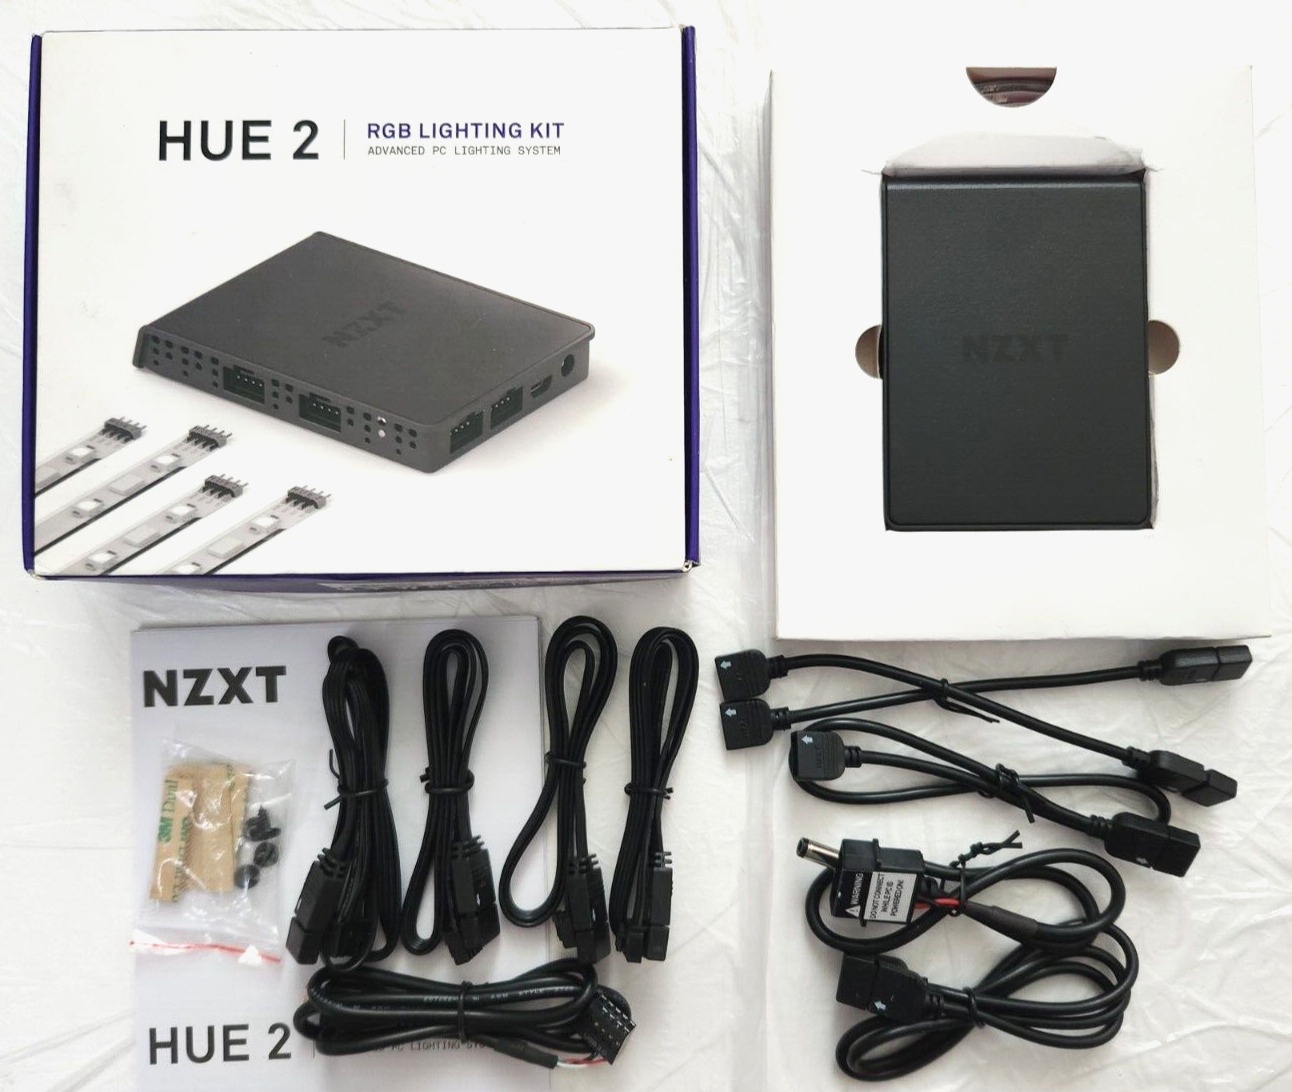 New  NZXT HUE 2 RGB Lighting Kit - Advanced PC Lighting System  - 